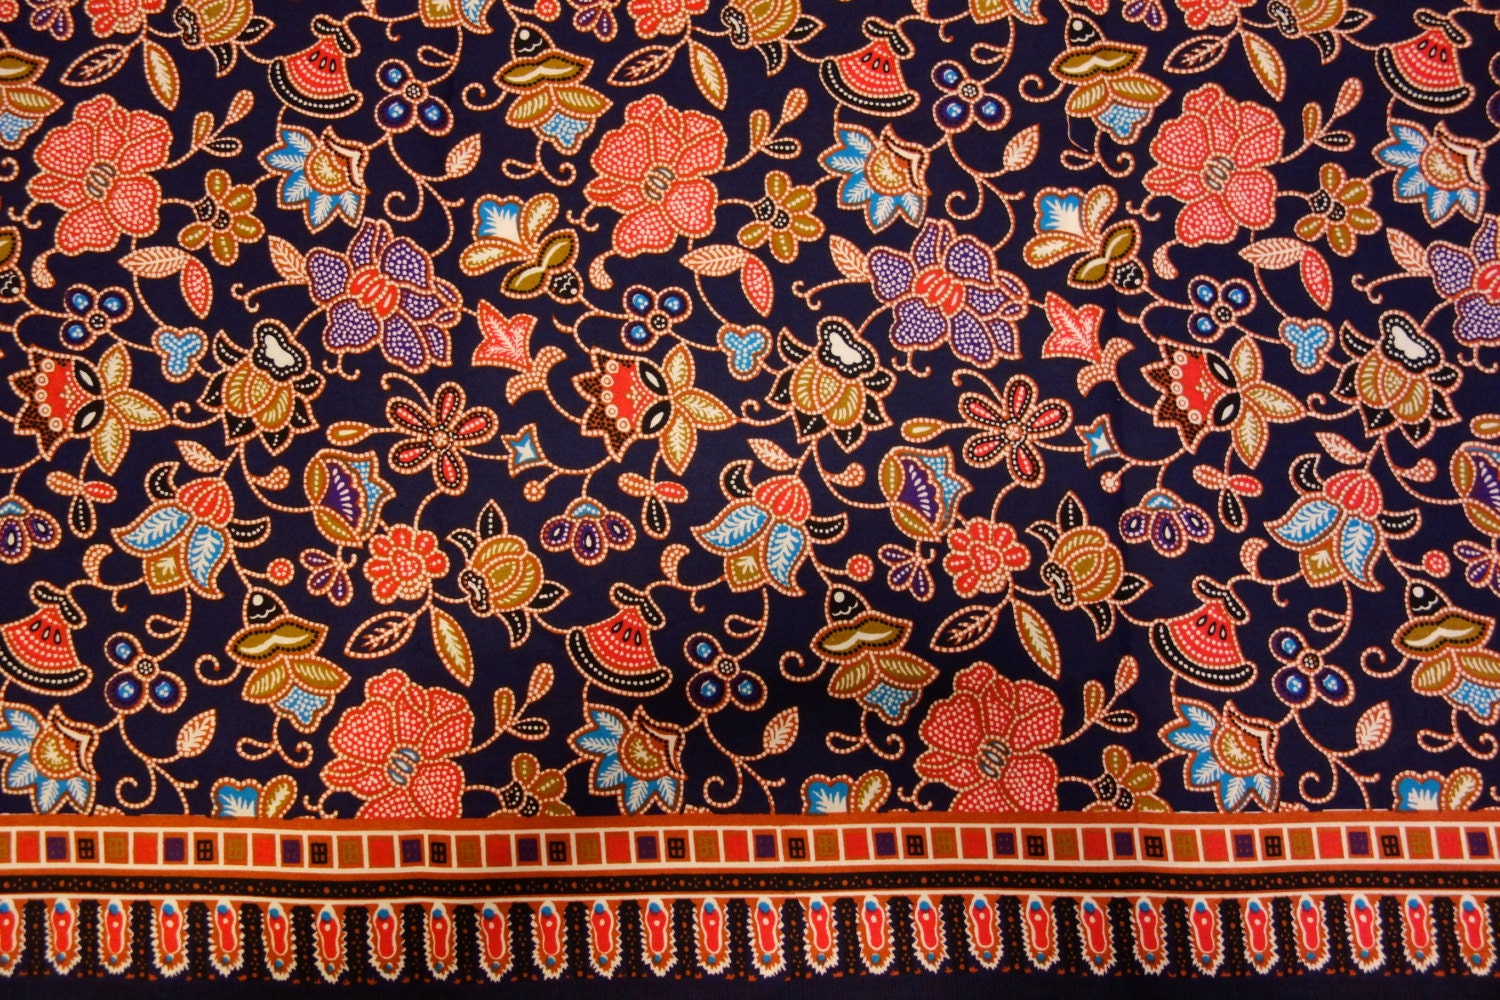 Sale Batik sarong fabric blue printed floral batik